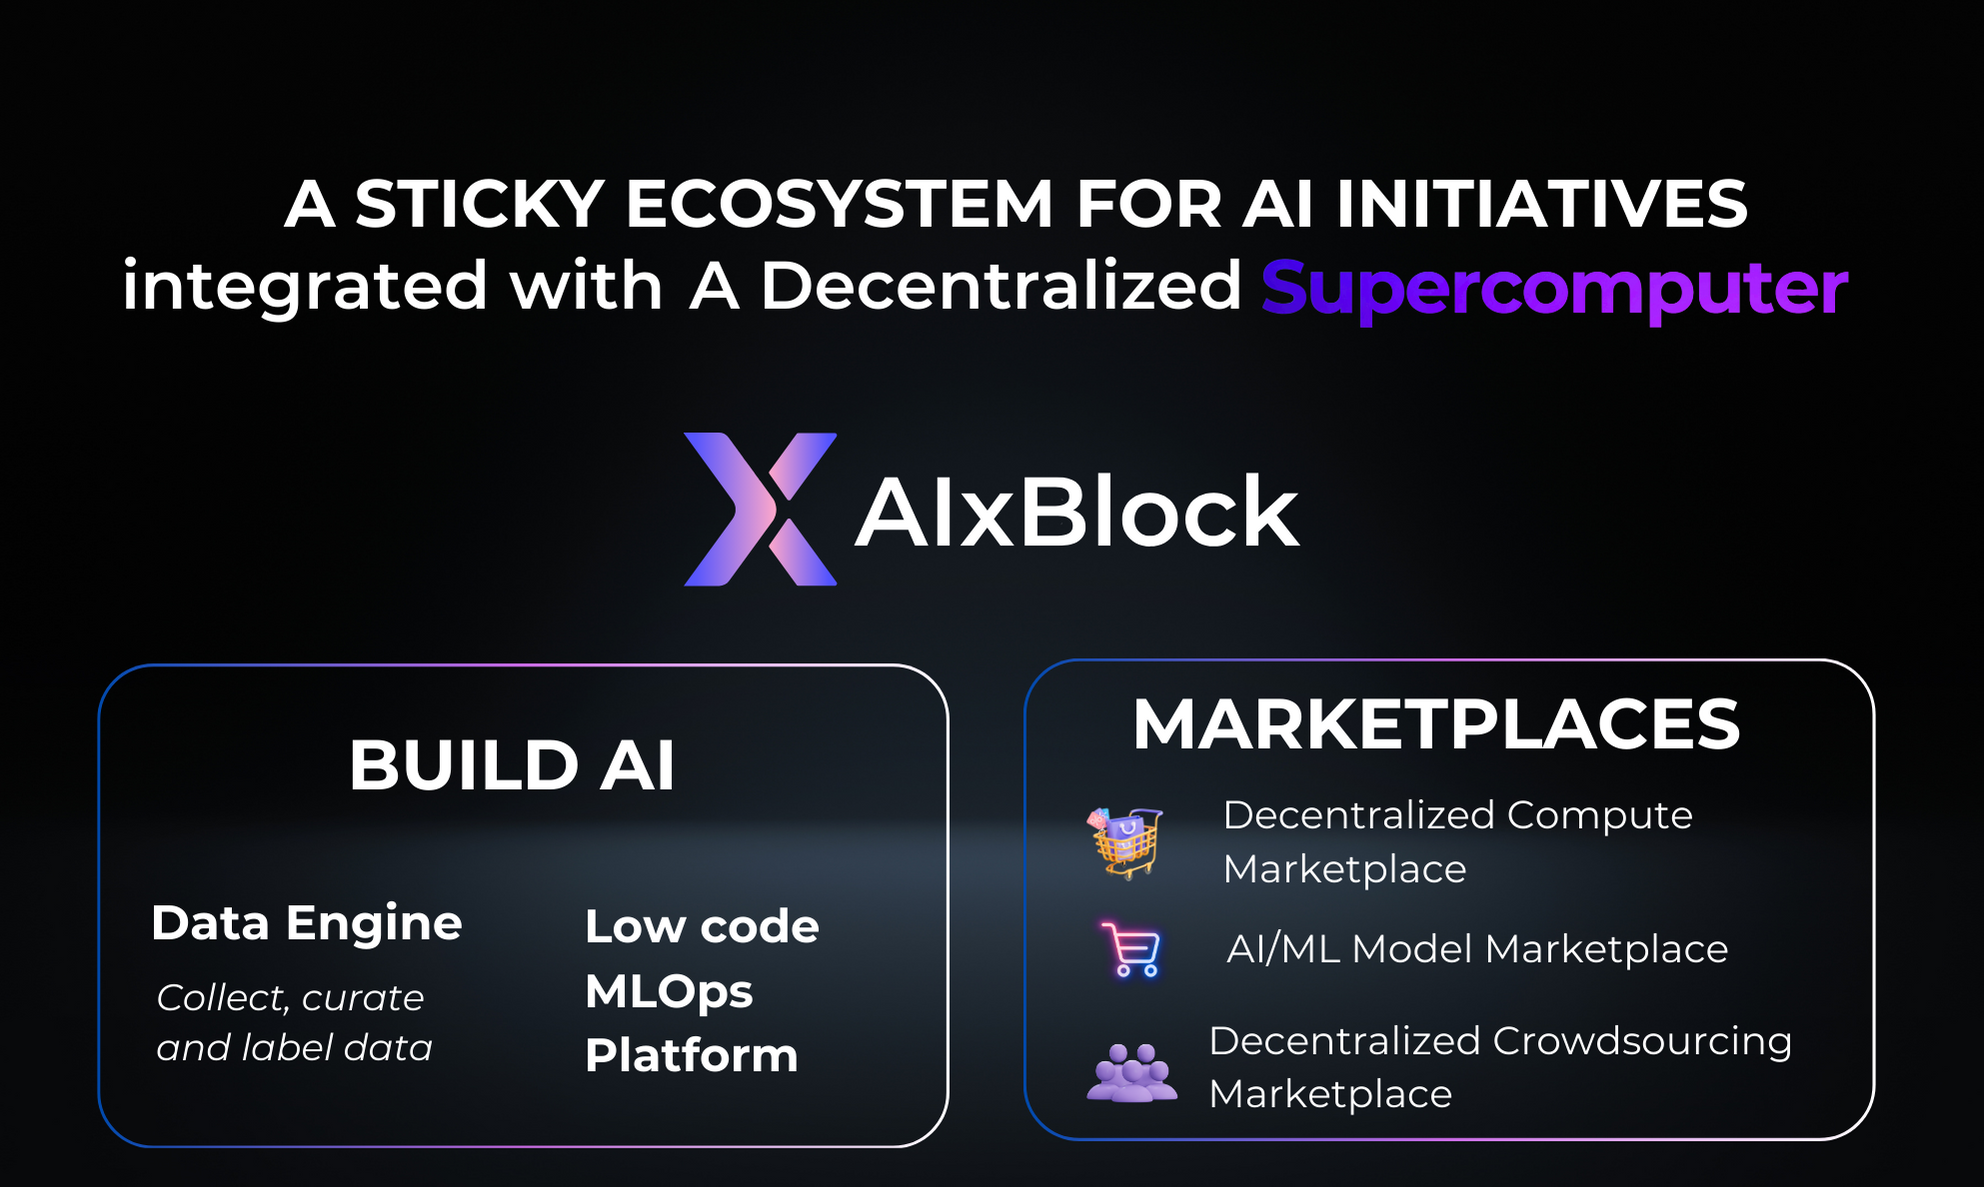 aixblock - End2end AI Platform with Decentralized Supercomputer